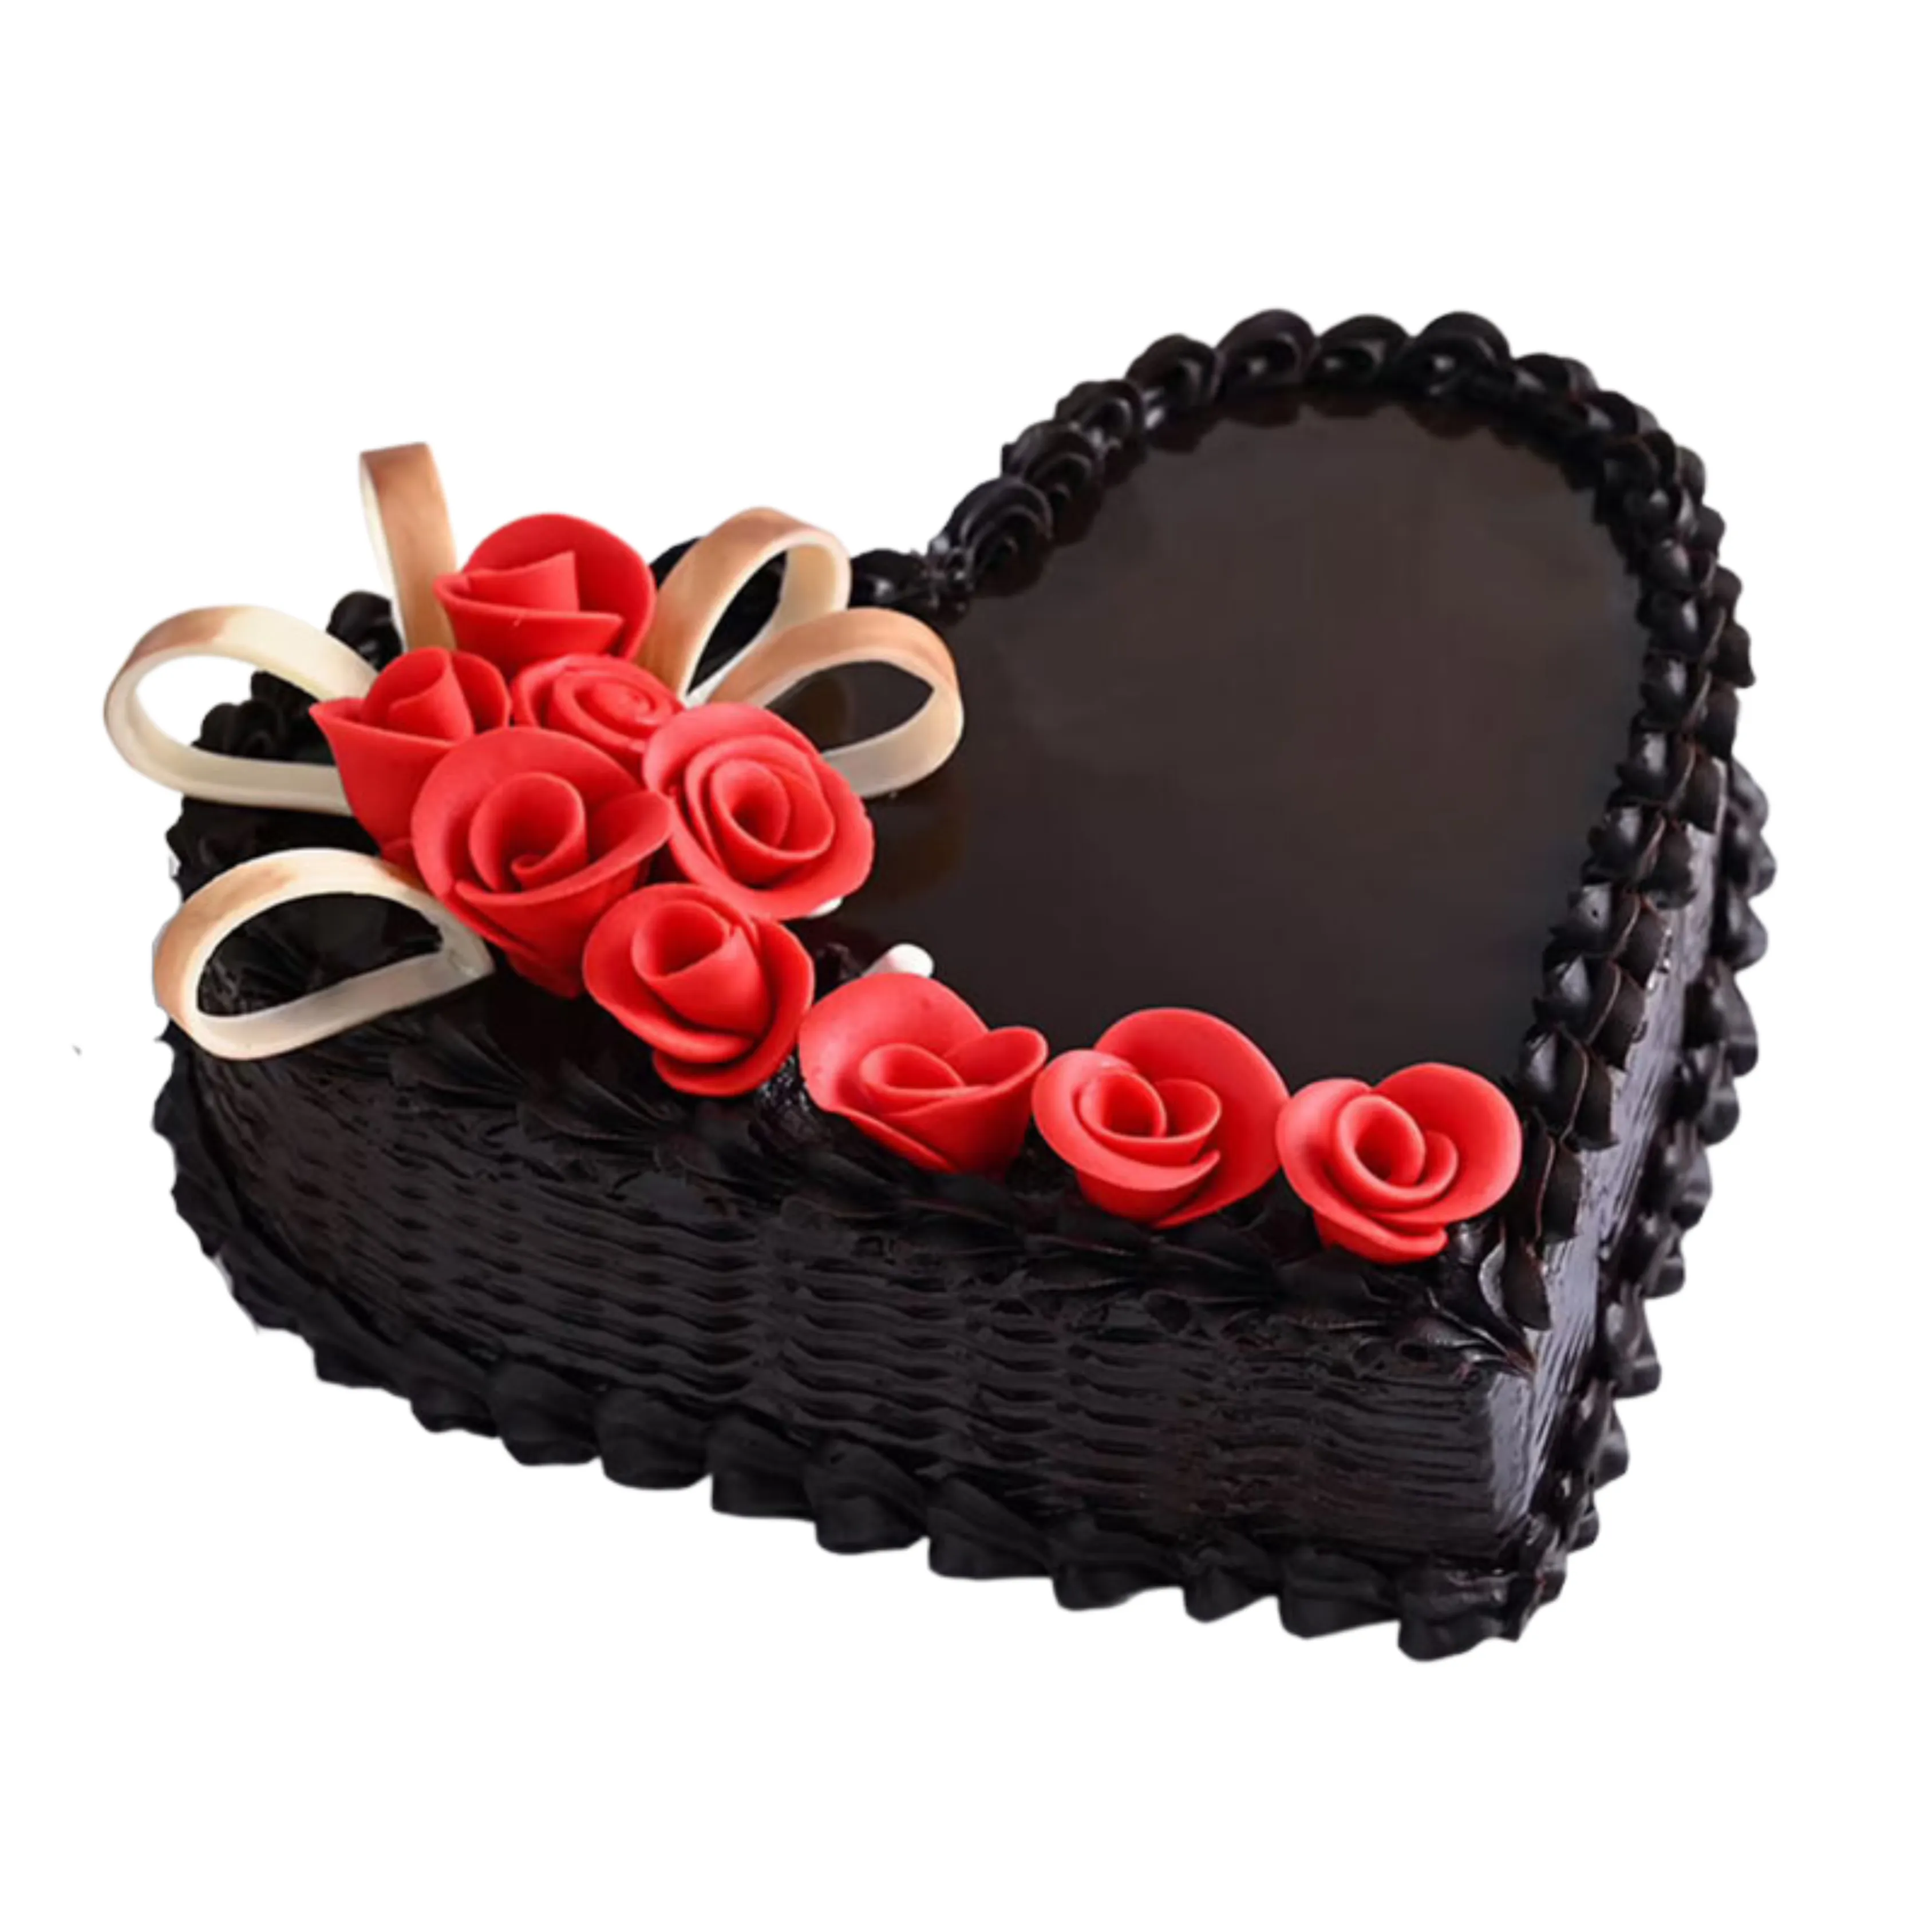 Rosy Heart Chocolate Designer Cake